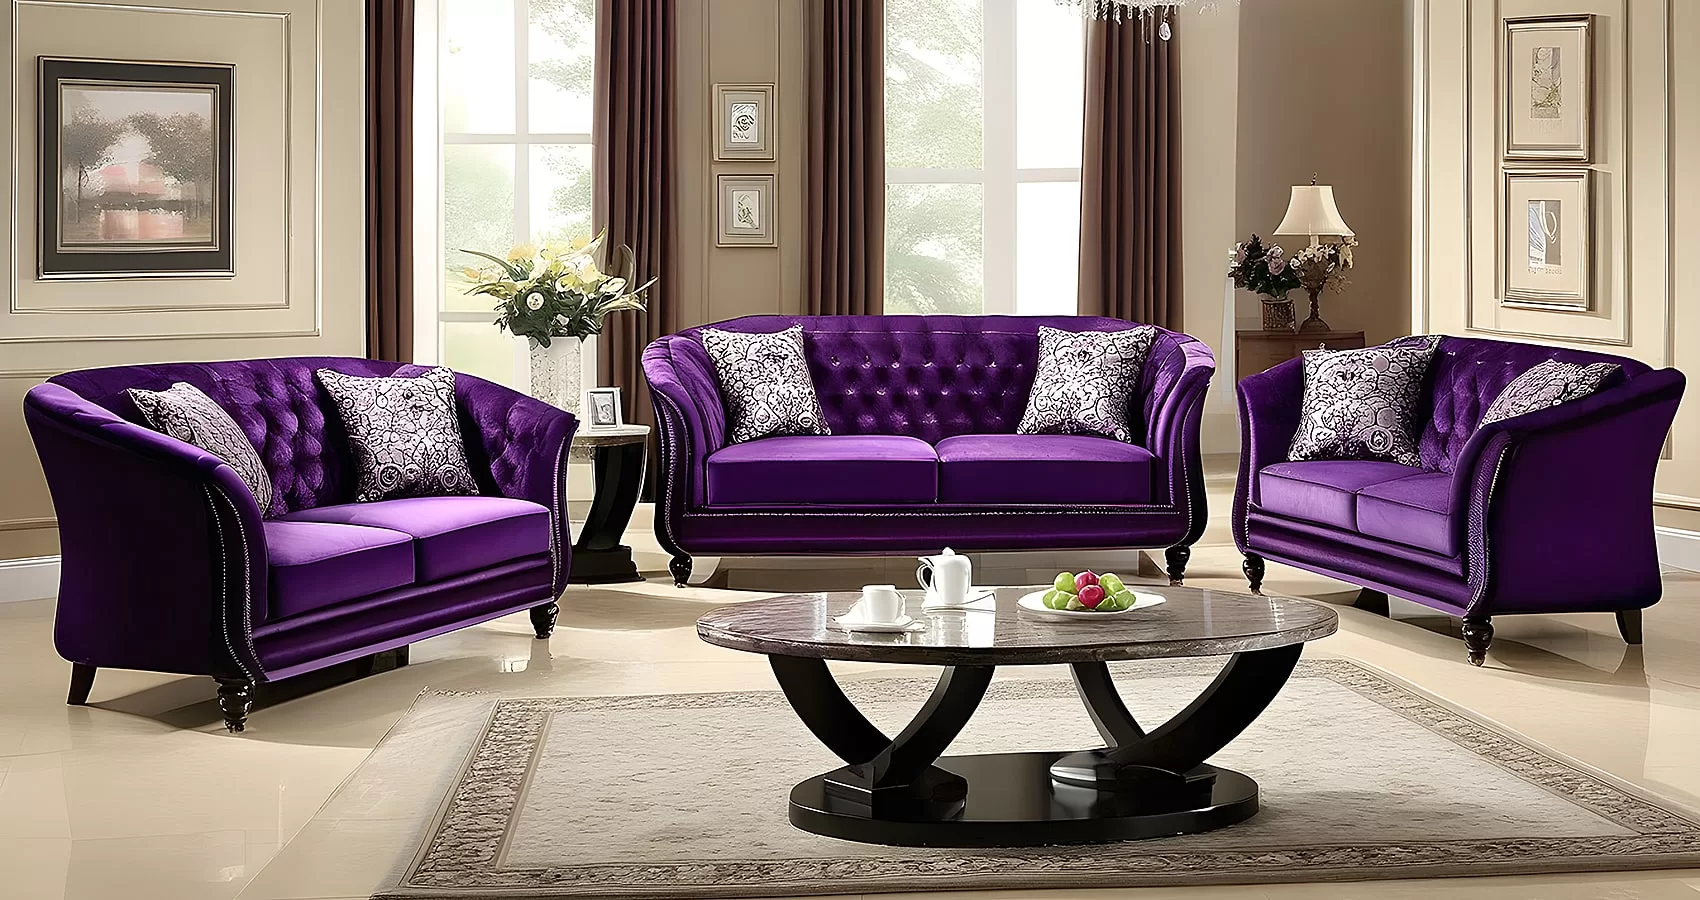 Purple Couch Living Room Ideas | Purple Sofa Living Room Ideas